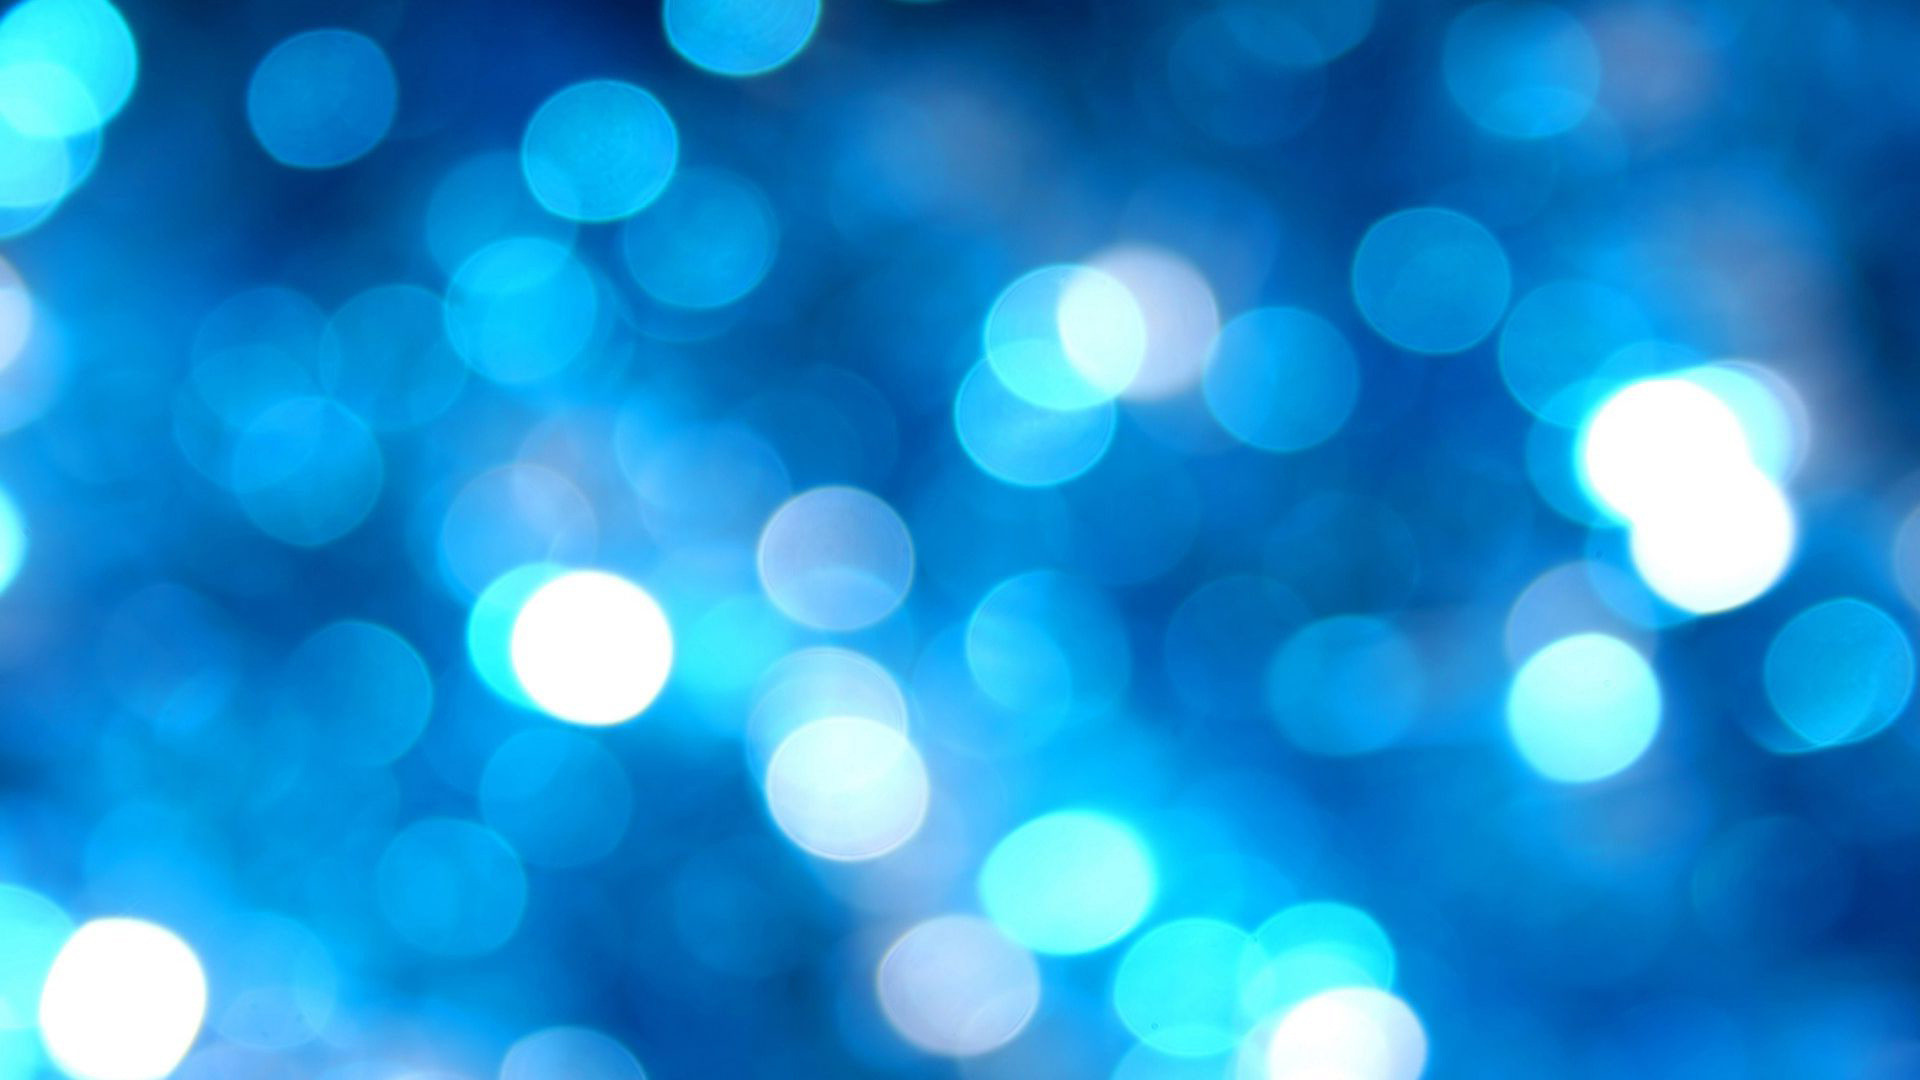 Night glows, blue blurry desktop wallpaper images